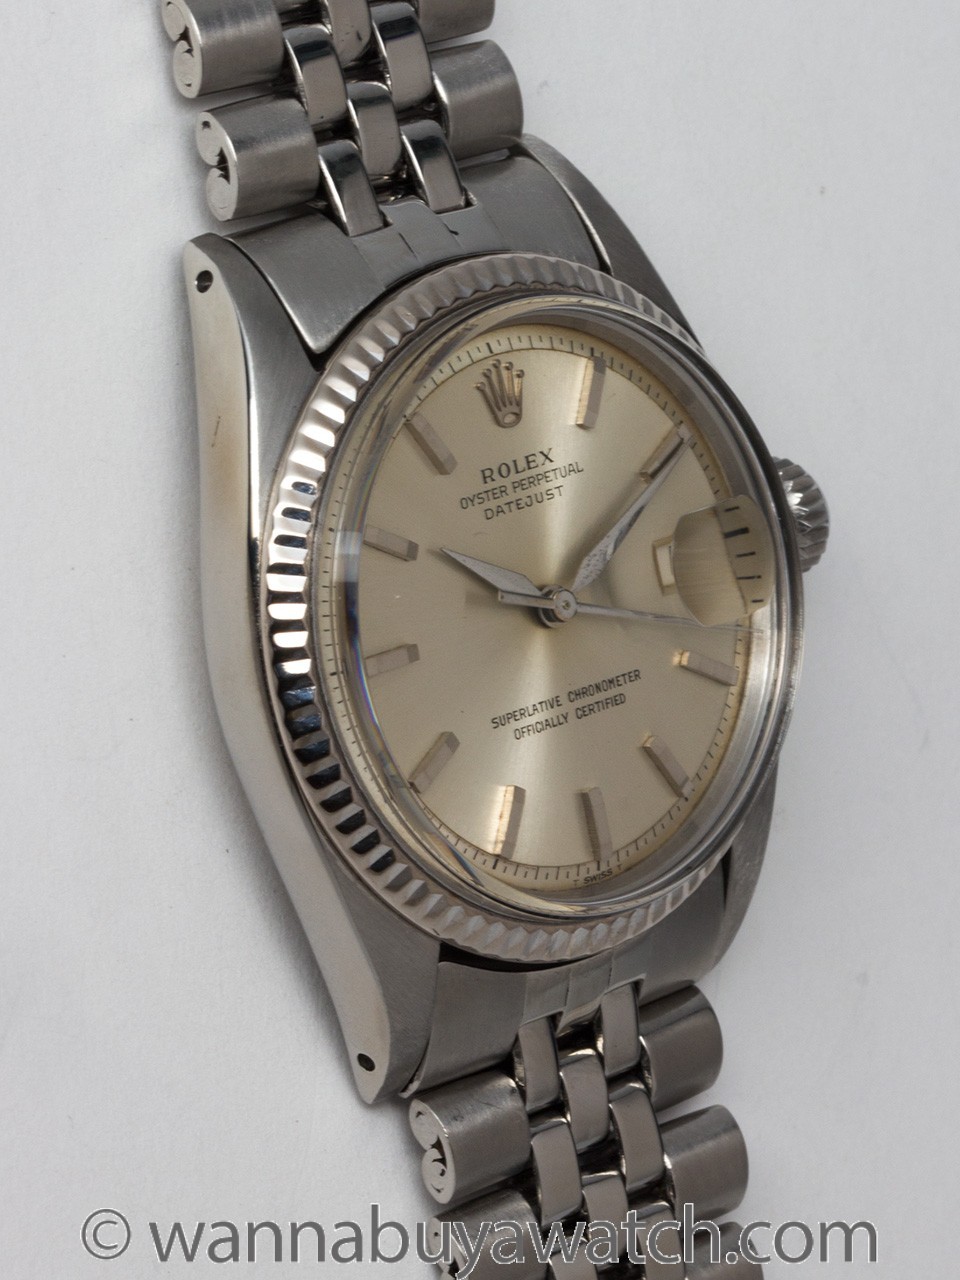 Rolex SS Datejust ref 1601 circa 1965